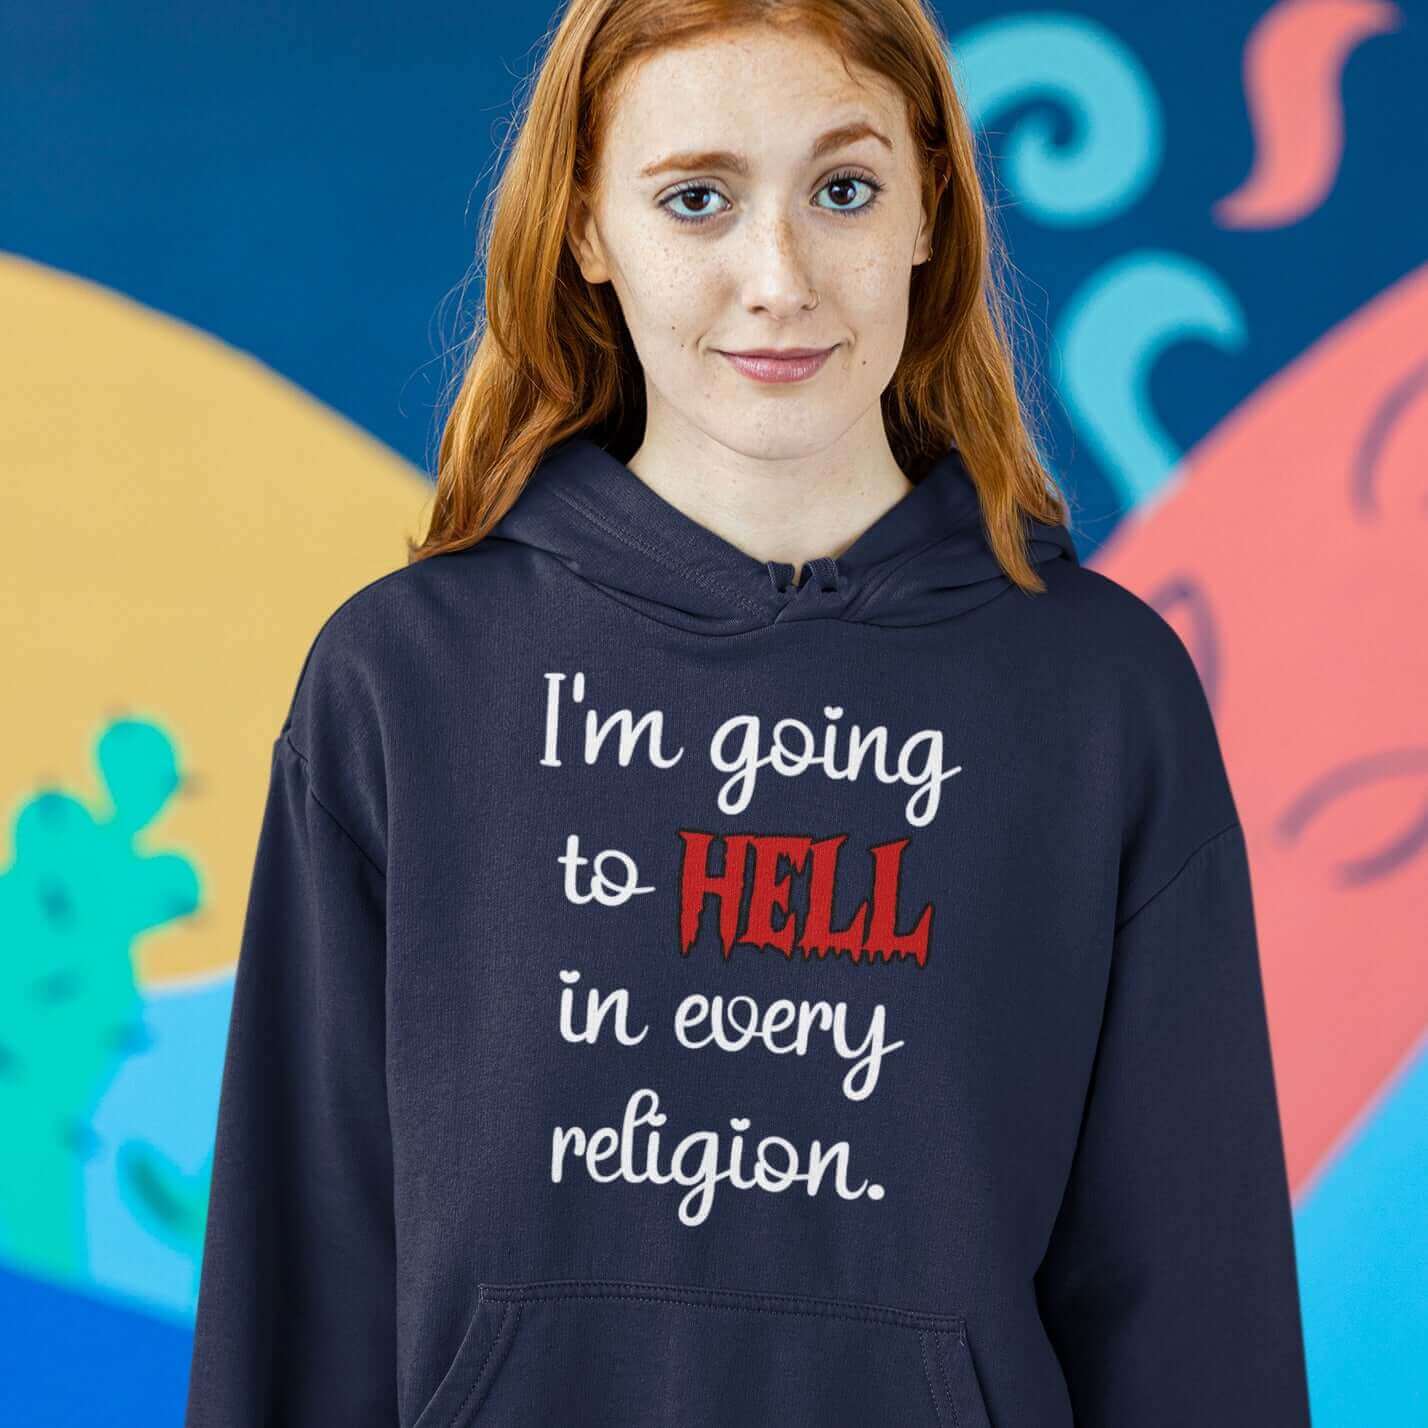 I'm going to hell hoodie. Funny hooded sweatshirt.